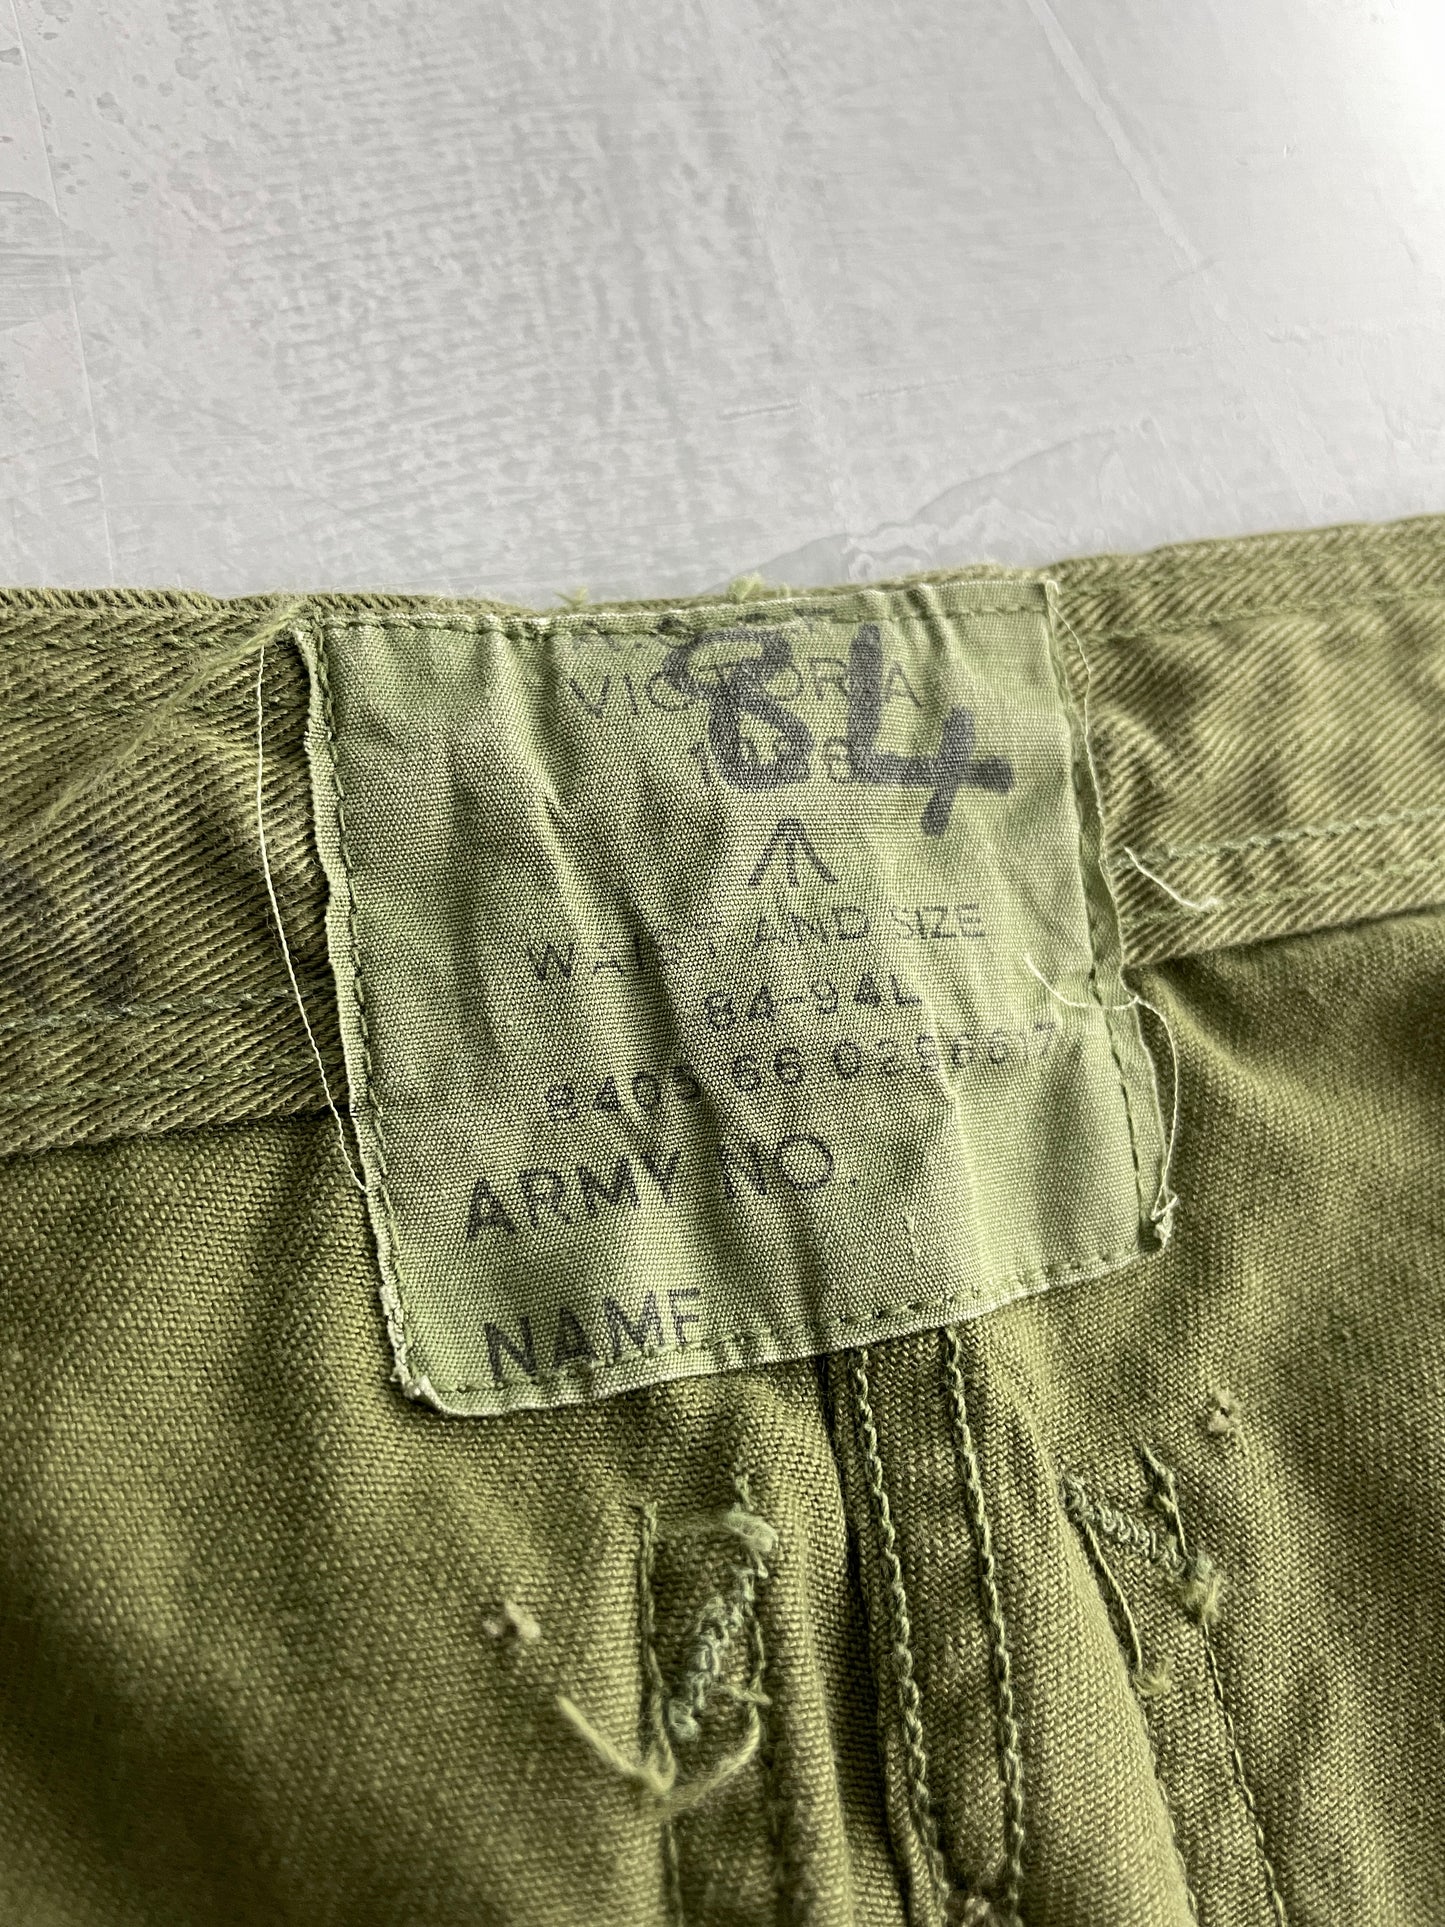 Aus Army Cargo Pants [32"]